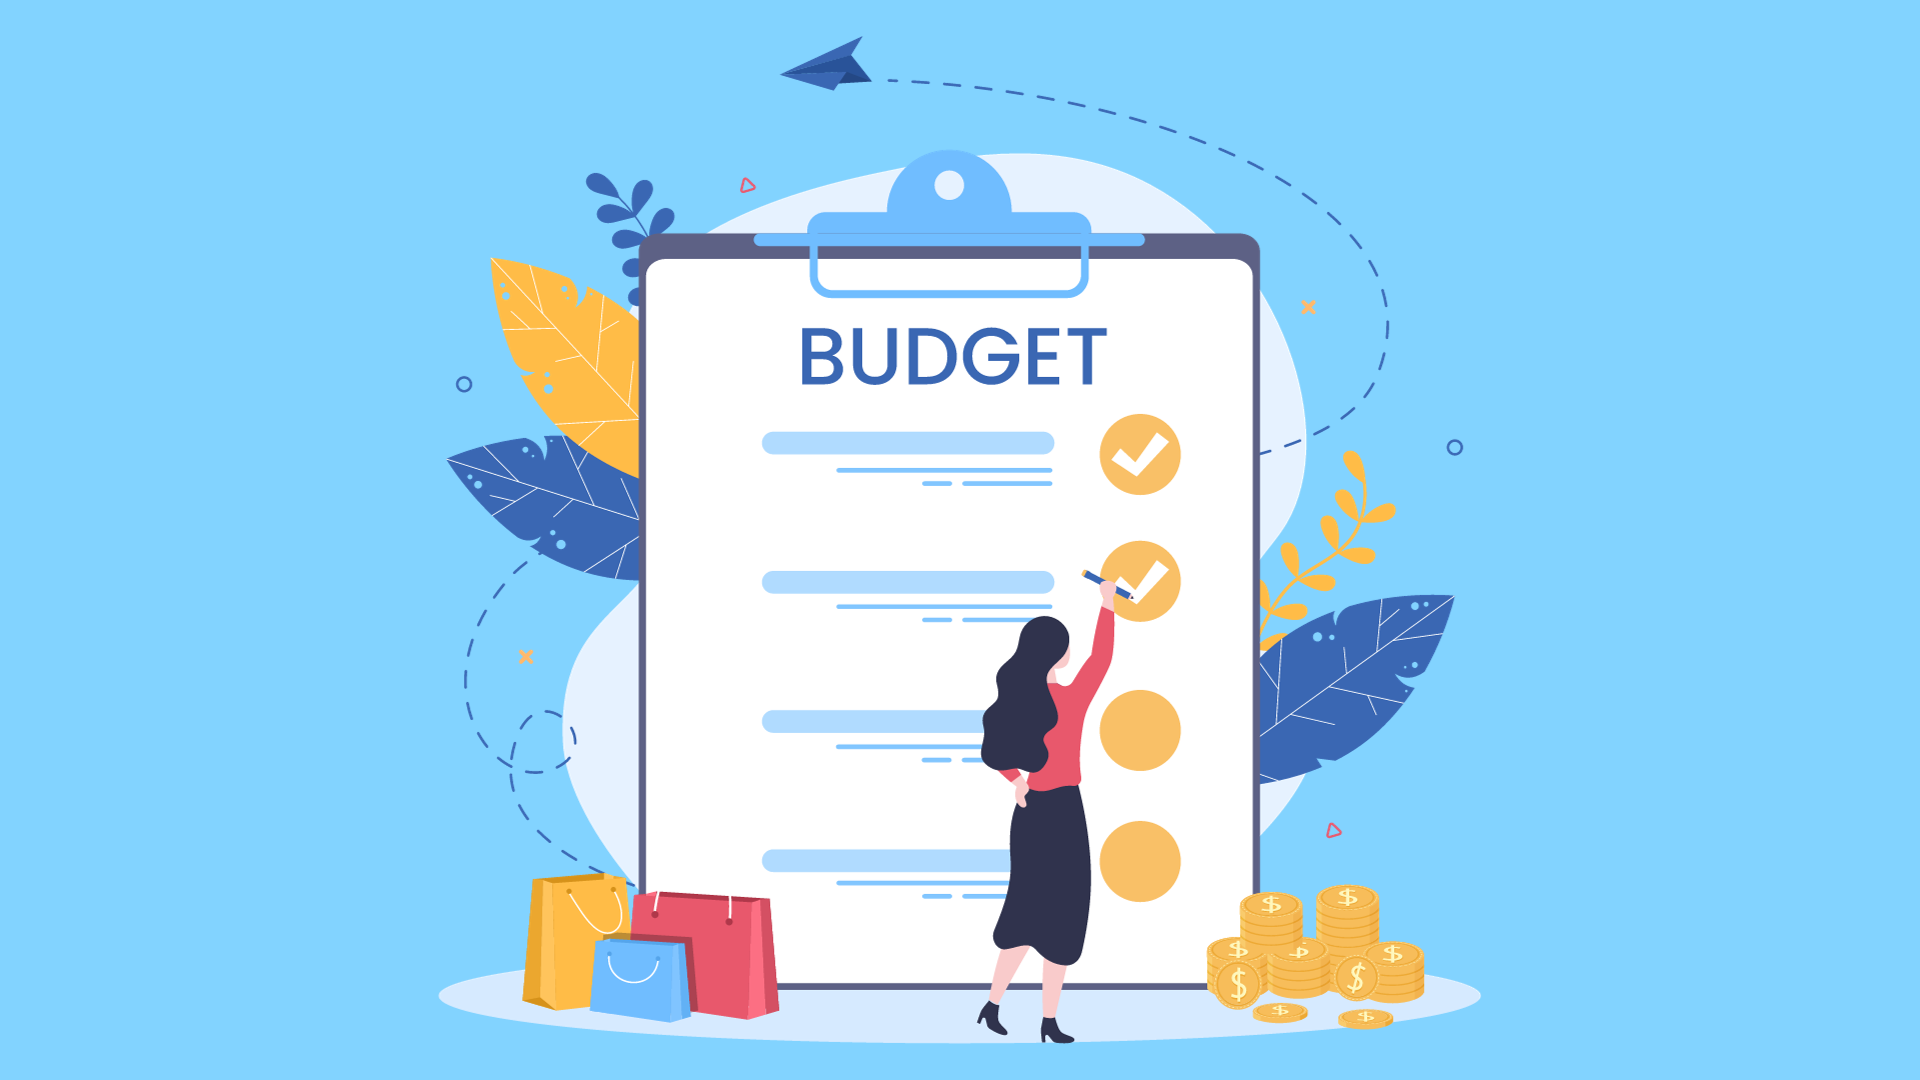 Budget concept illustration